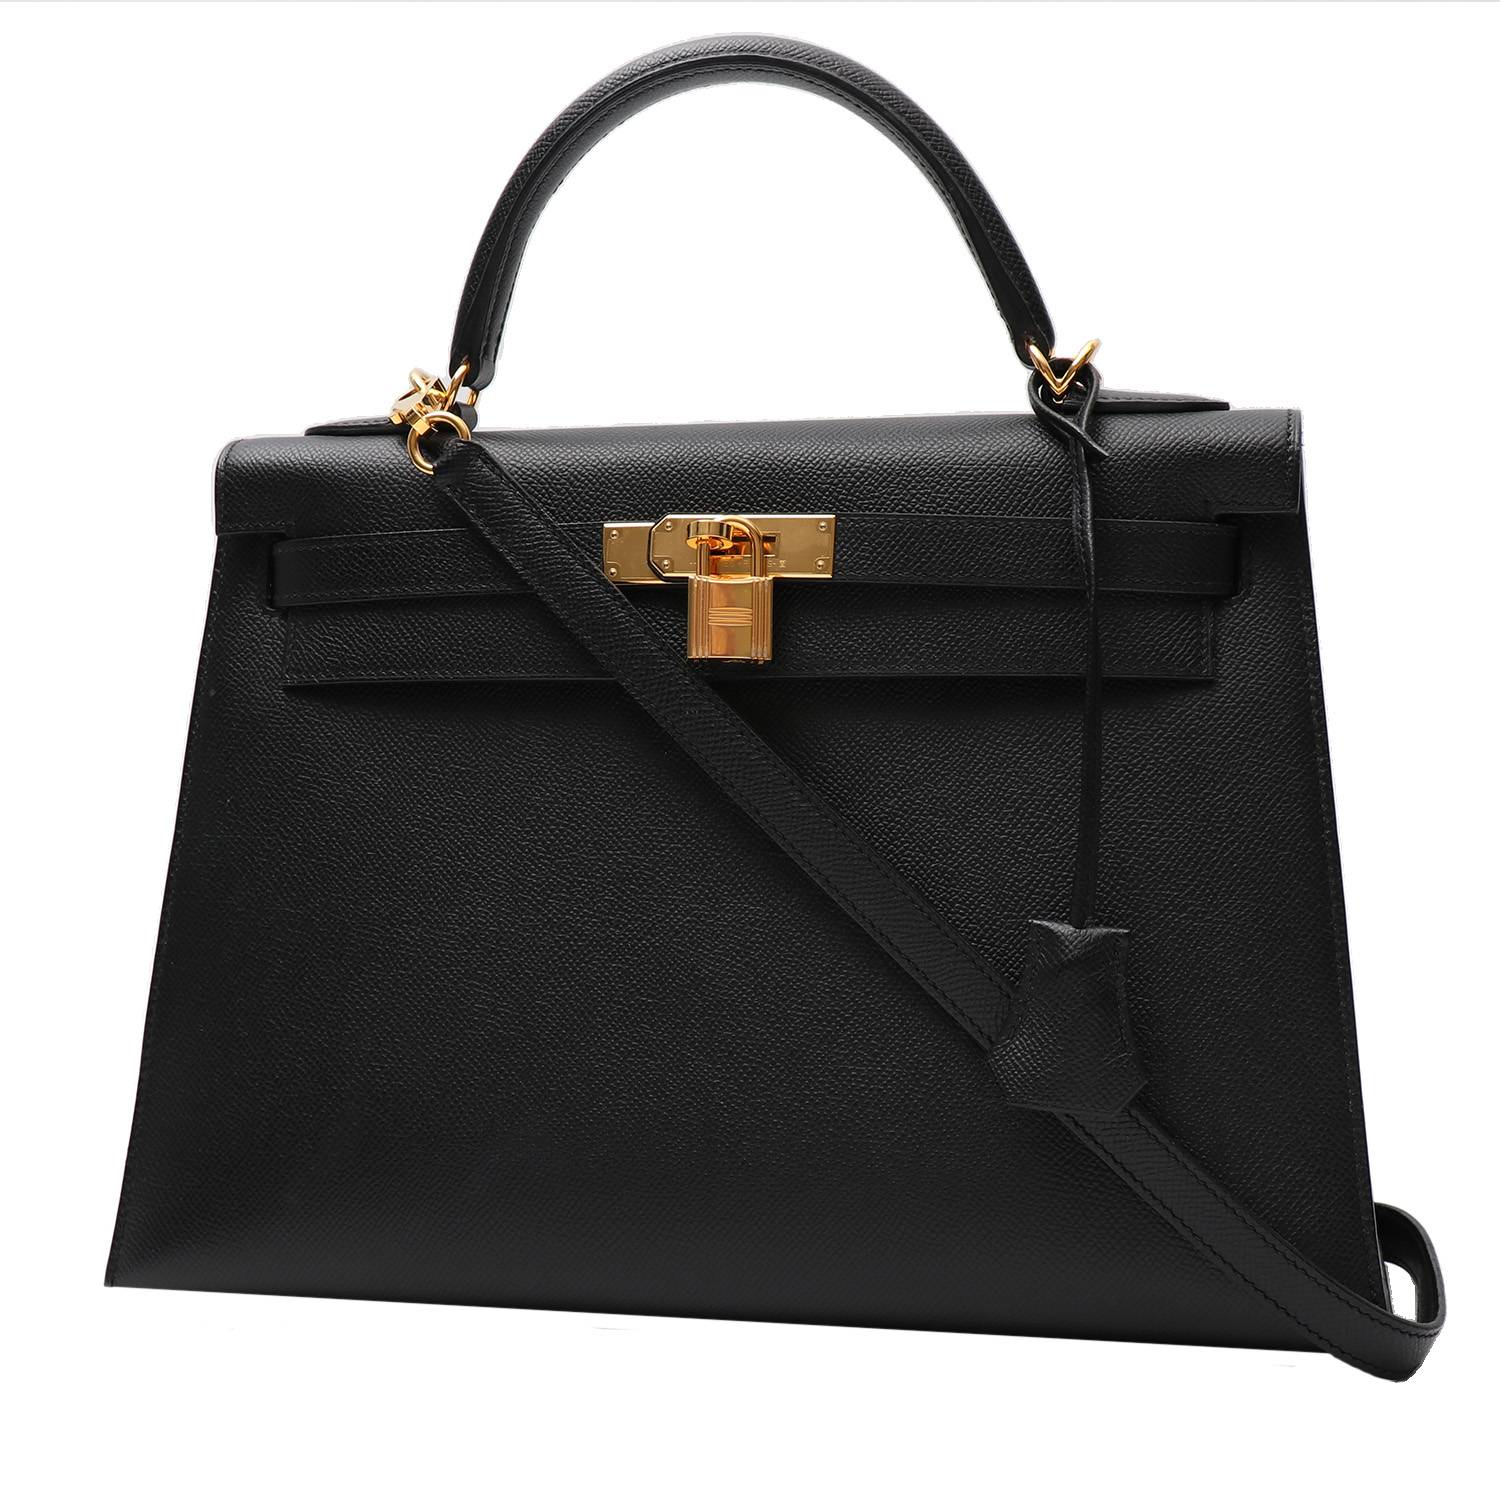 Great Condition Hermes 32cm Black Box Leather Shoulder Kelly Handbag, -  Ruby Lane